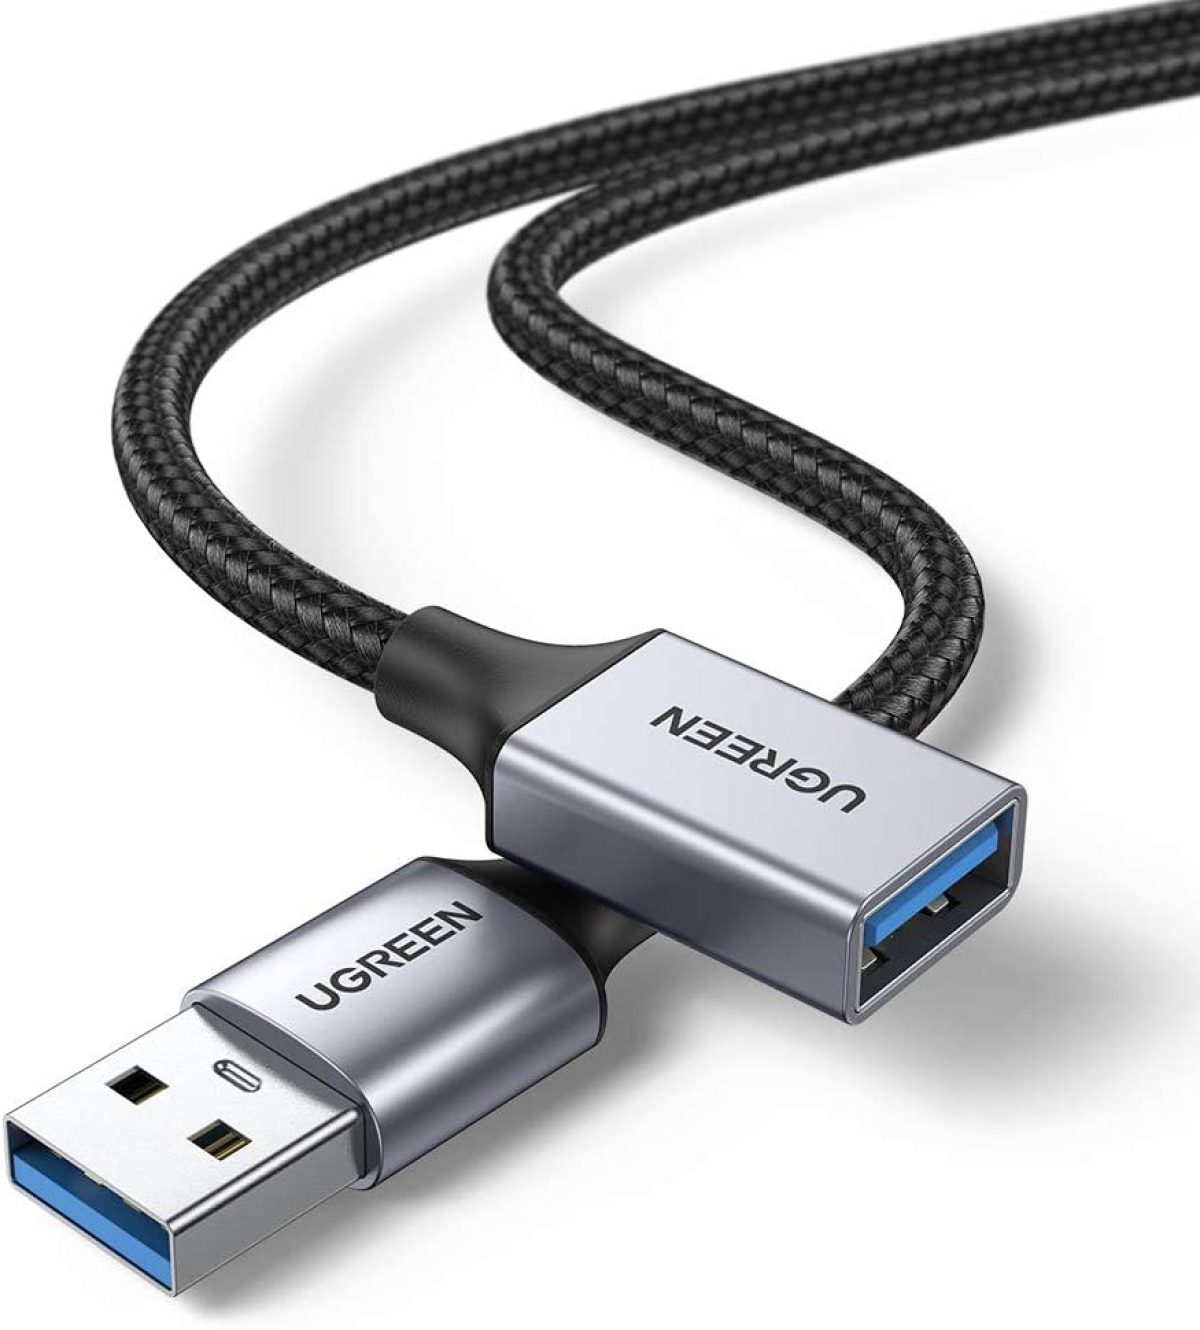 Rallonge USB 3.0 2M UGREEN - CONSOMMABLES - Nozzler